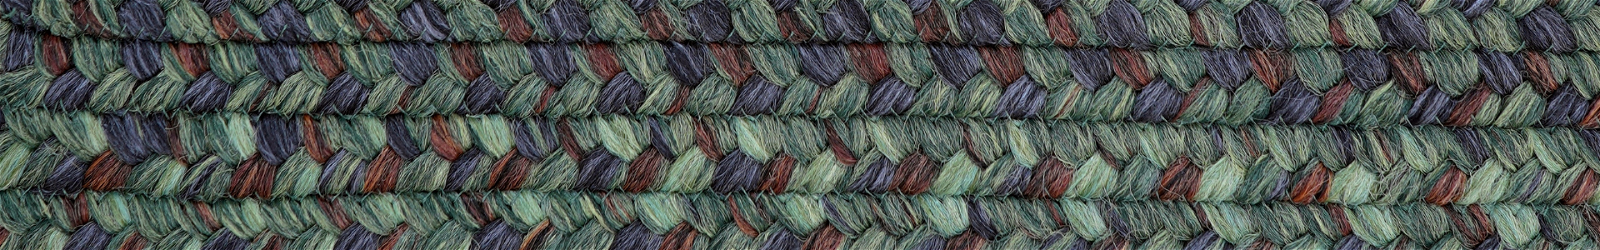 Polypropylene - Green Braided Rugs